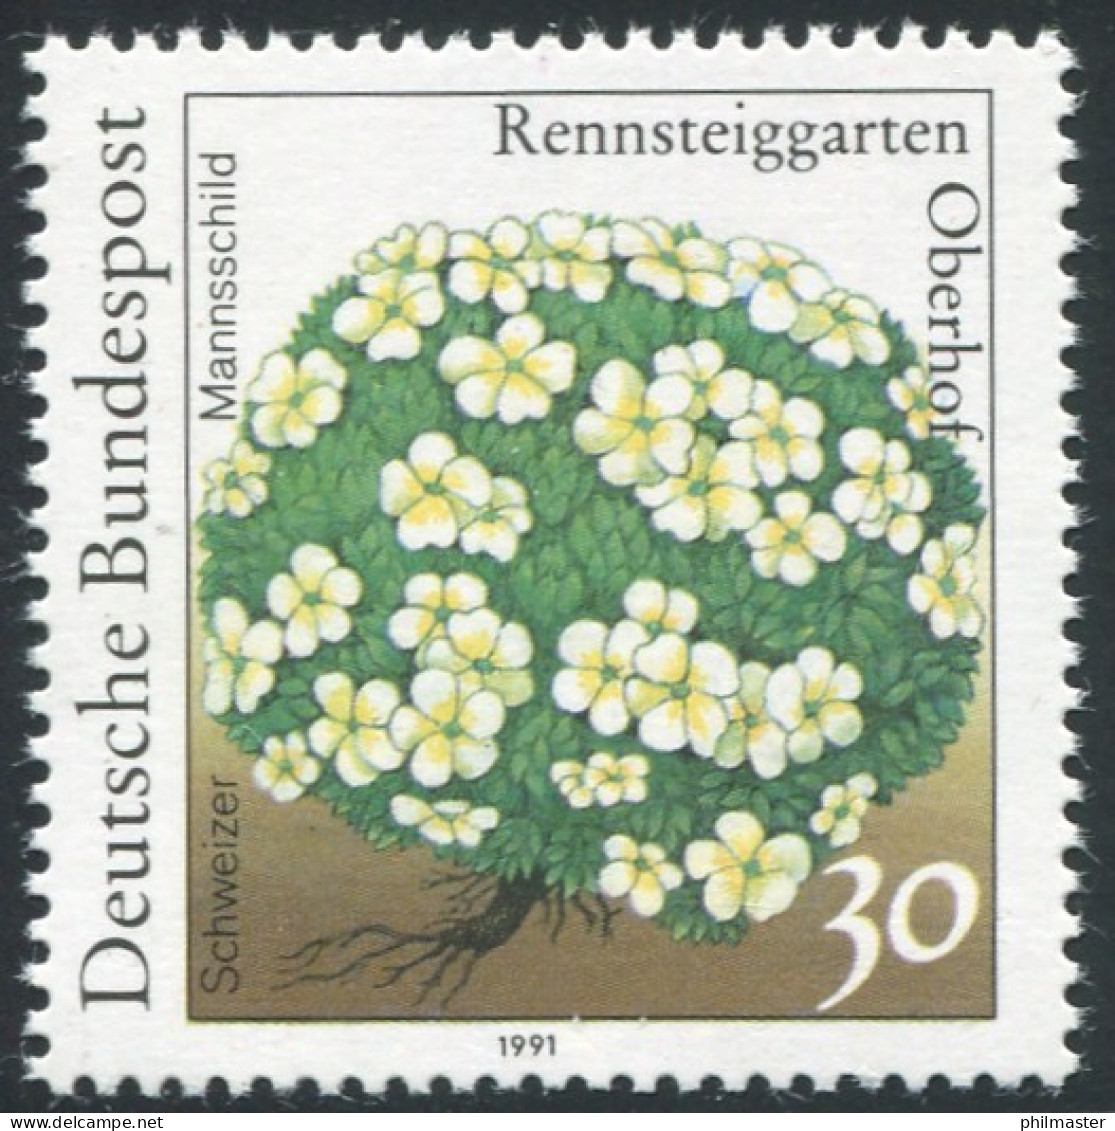 1505 Rennsteig 30 Pf, PLF Grüner Punkt Im Blütenblatt, Felder 25,27,29,31 ** - Varietà E Curiosità